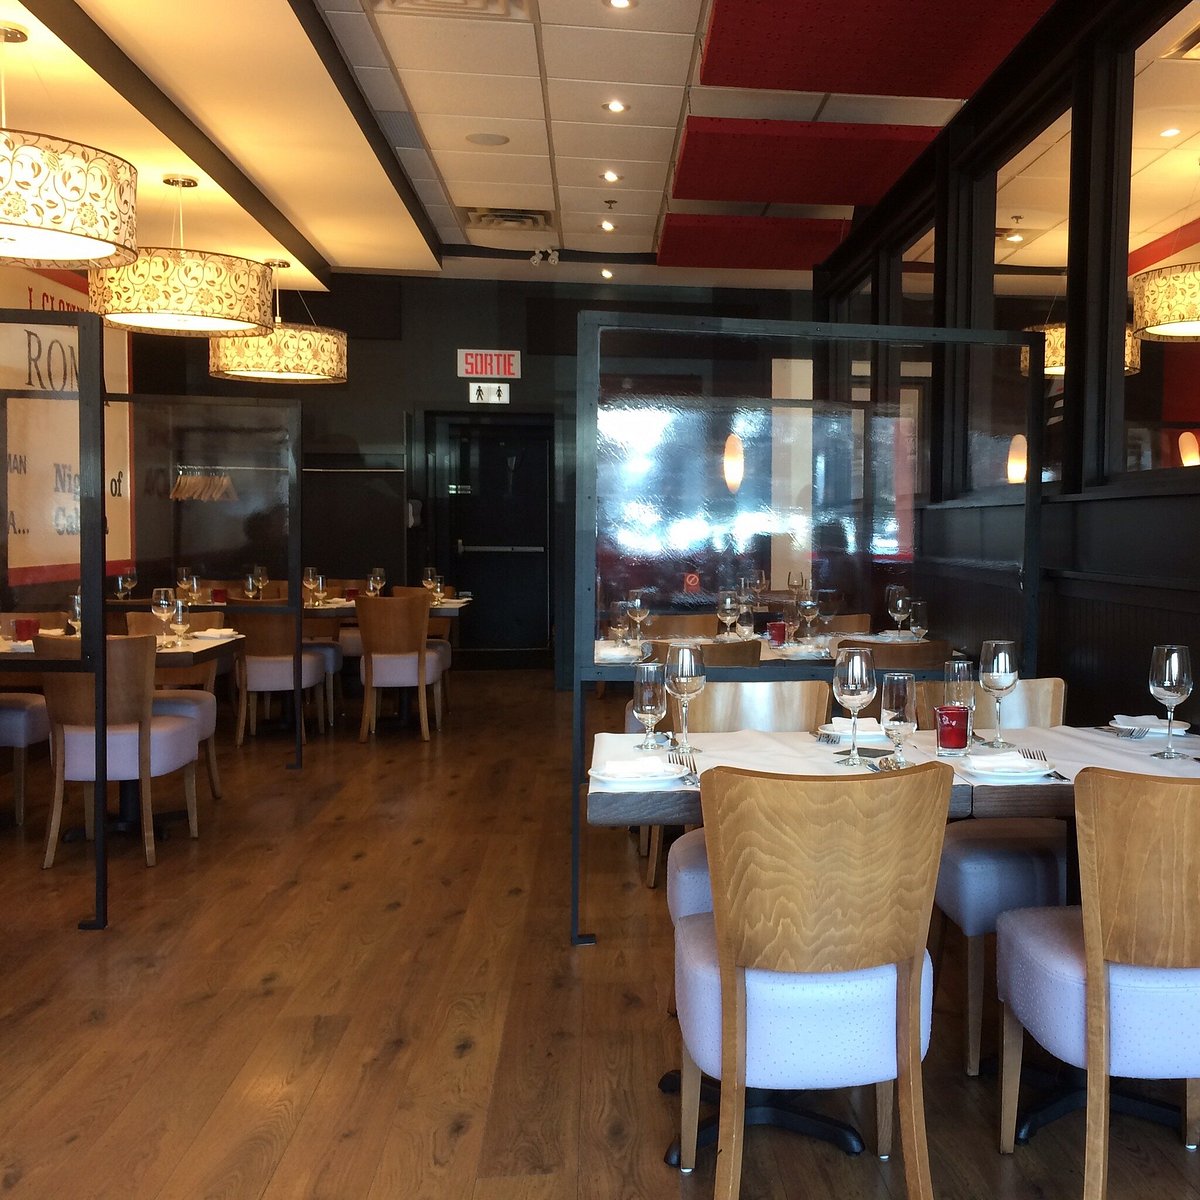 RESTAURANT PIATTI PRONTI, Laval - Restaurant Reviews, Photos & Phone Number  - Tripadvisor